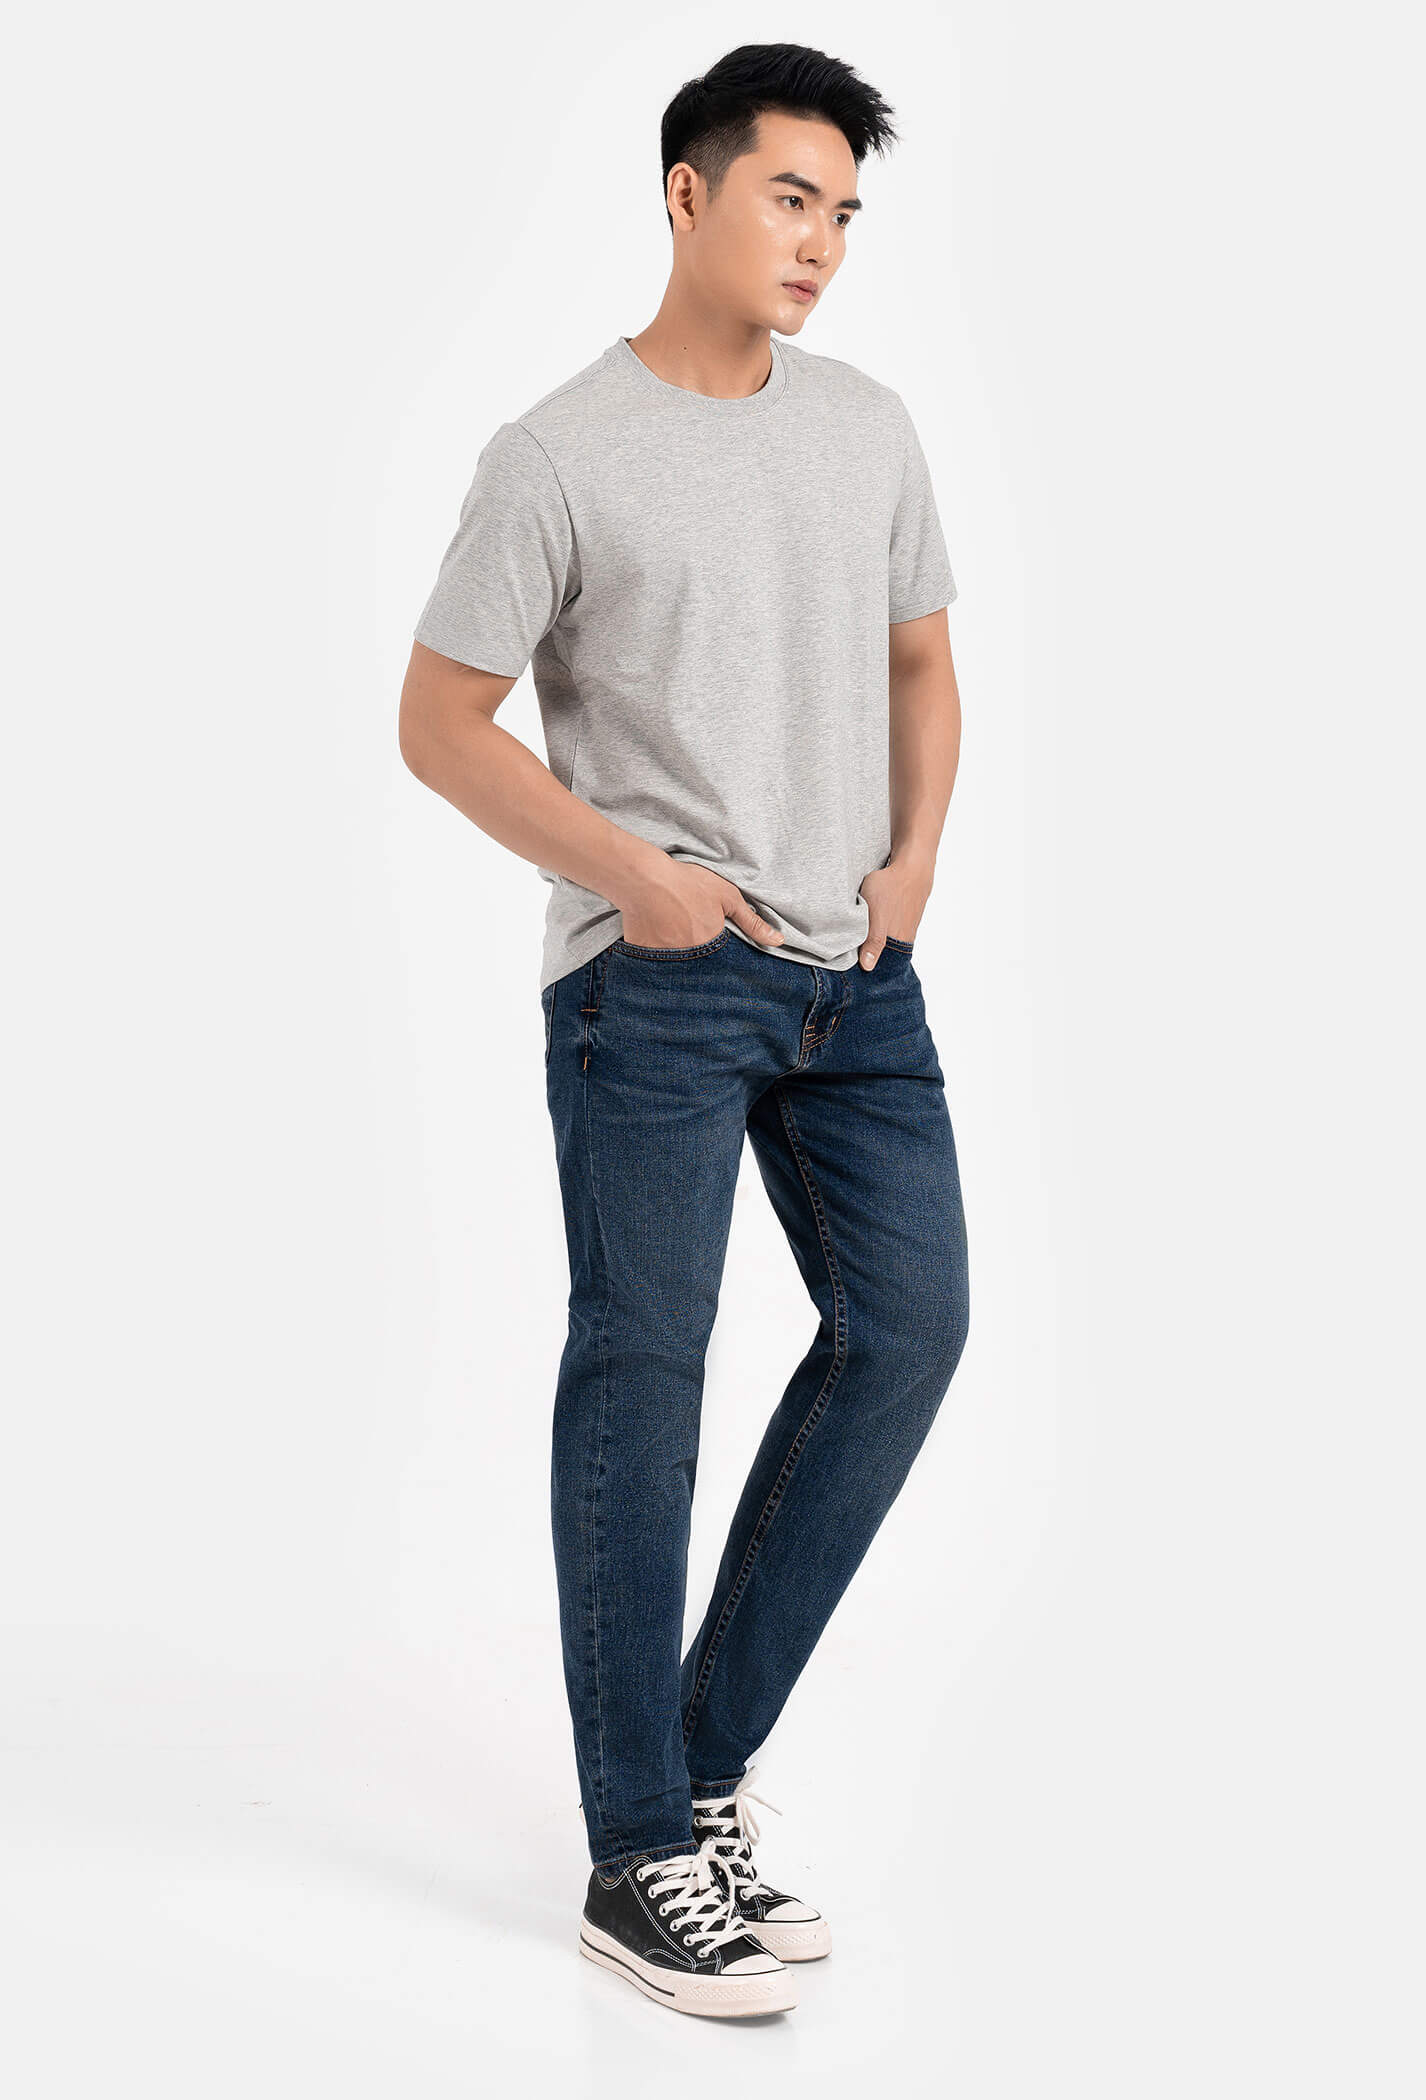 OUTLET - Quần Jeans Basic Slim V2 Xanh đậm 2